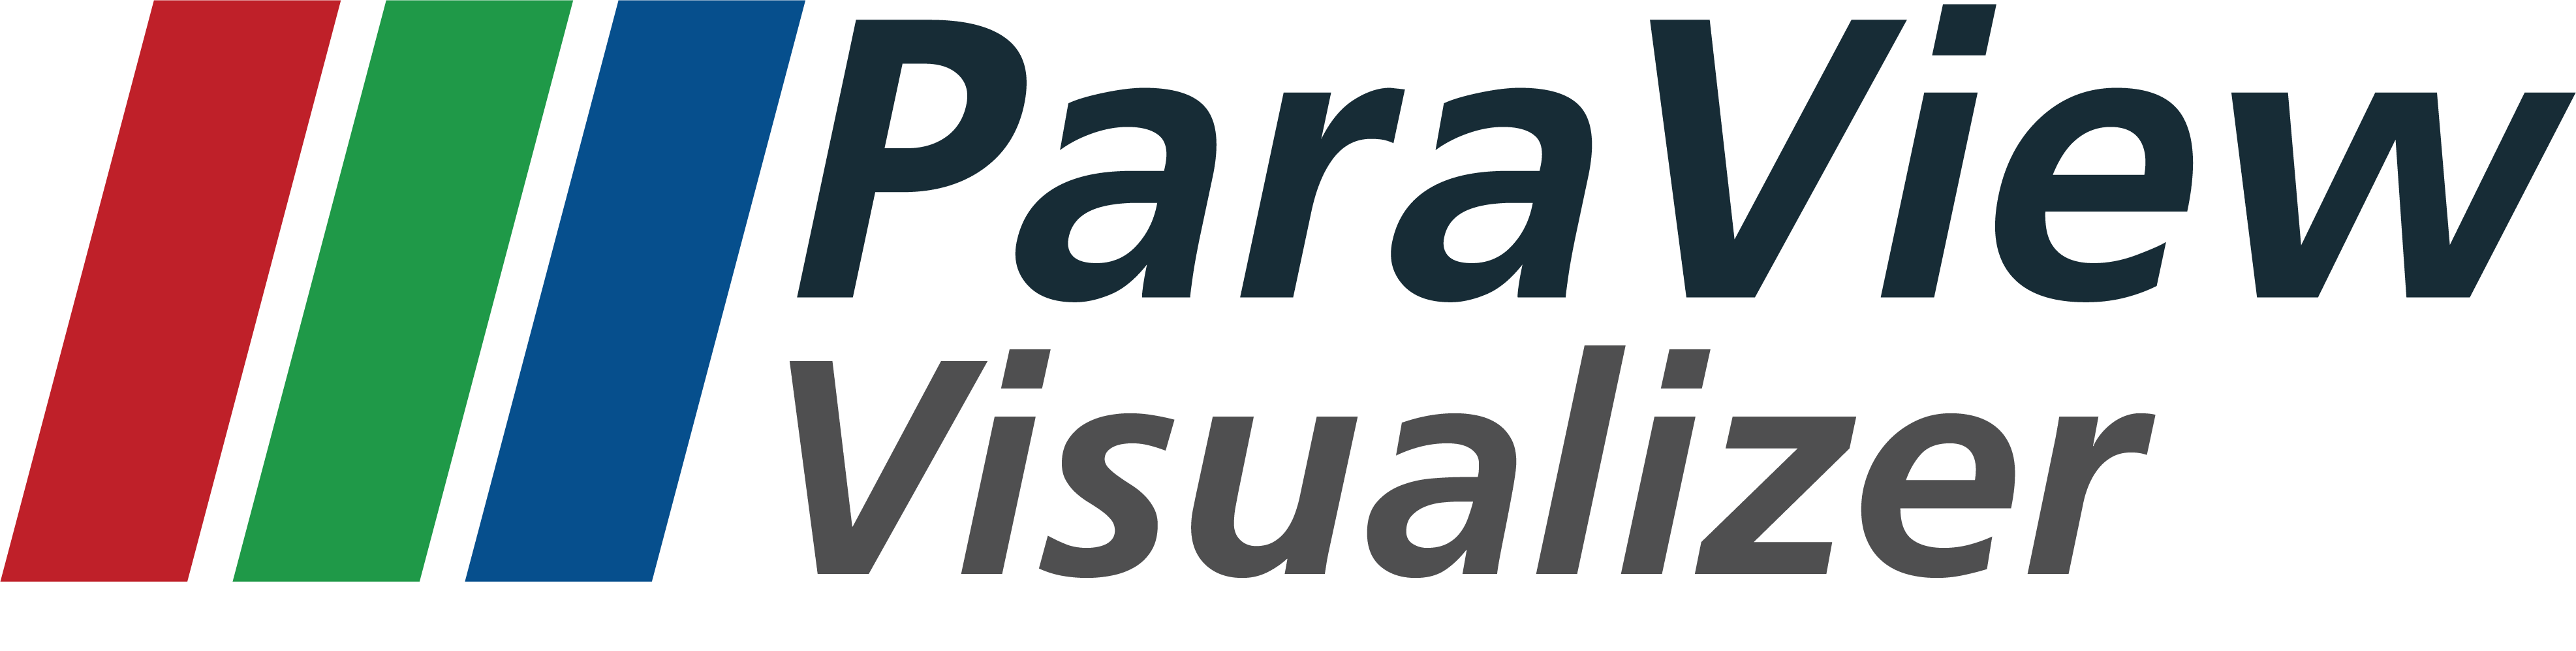 ParaViewWeb - Visualizer